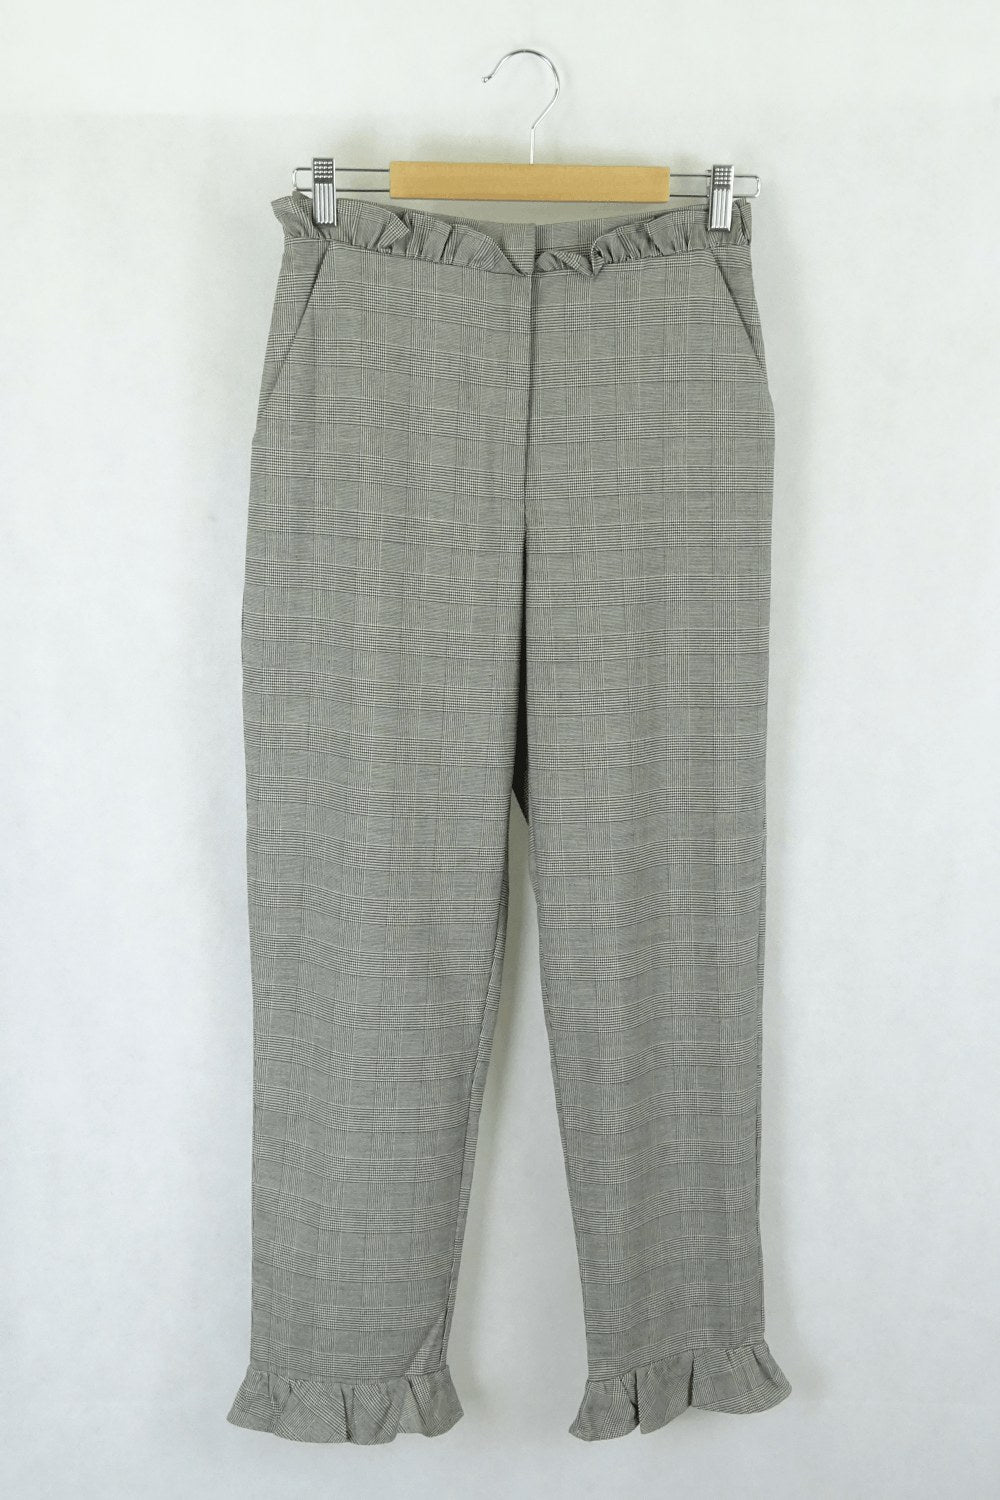 H&amp;M Grey Print Ruffle Pants 8